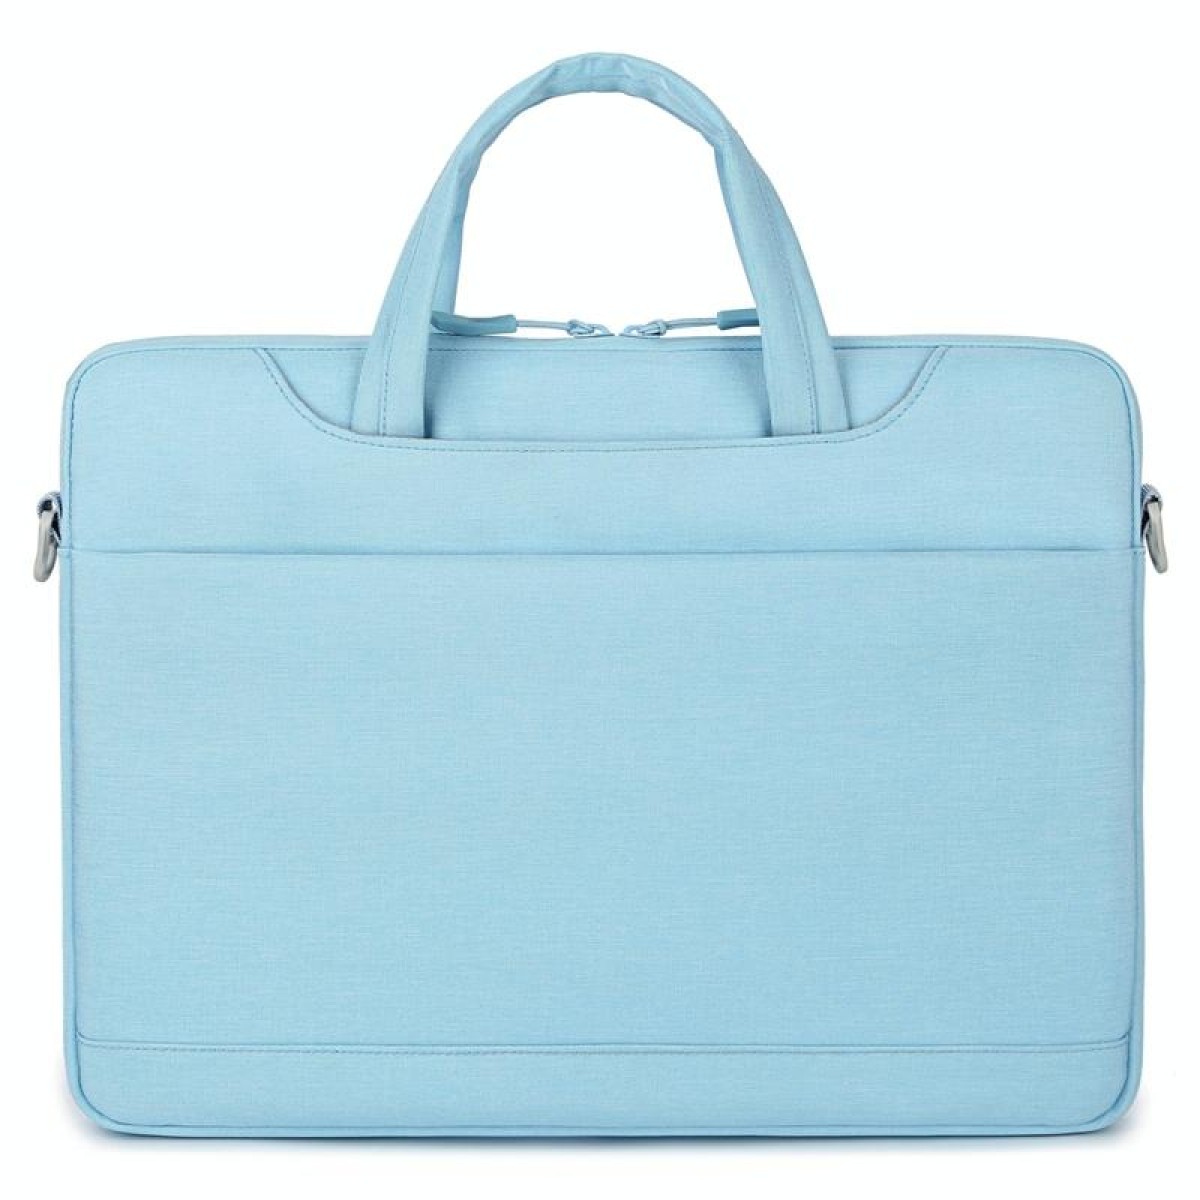 P510 Waterproof Oxford Cloth Laptop Handbag For 15-16 inch(Blue)